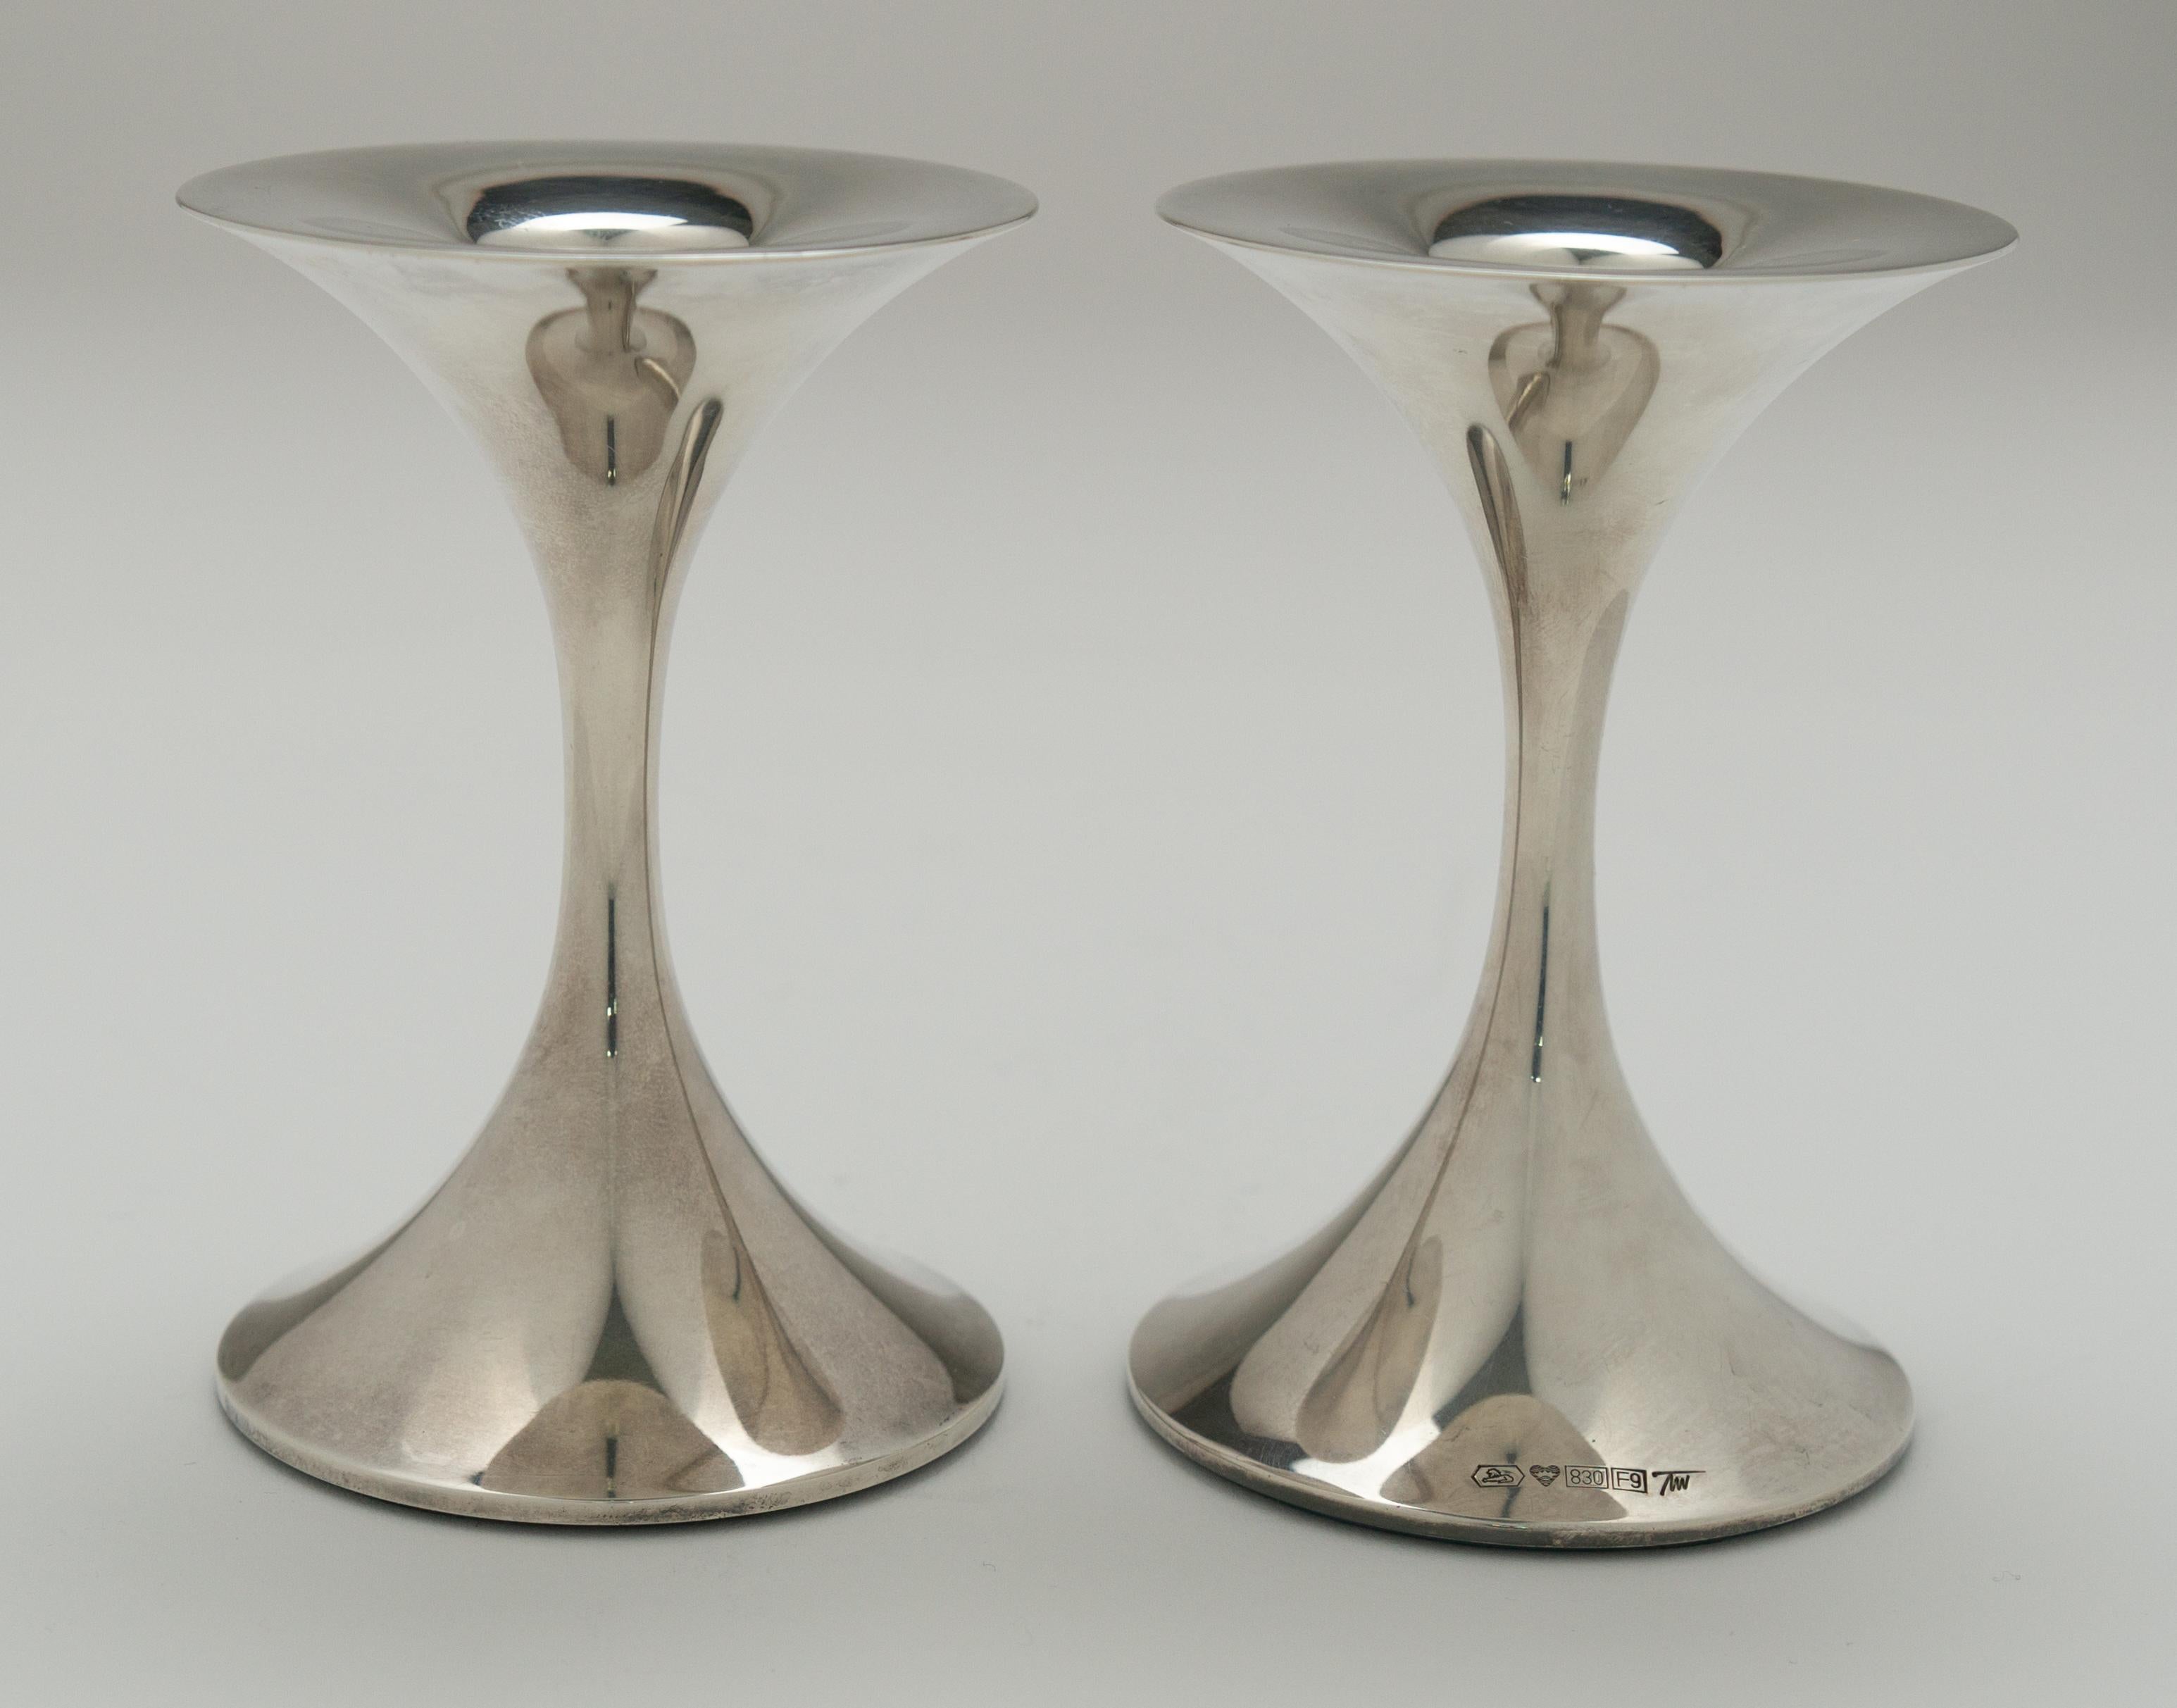 Modern Pair of Silver “Trumpetti” Candlesticks Model TW 284, Designed by Tapio Wirkkala